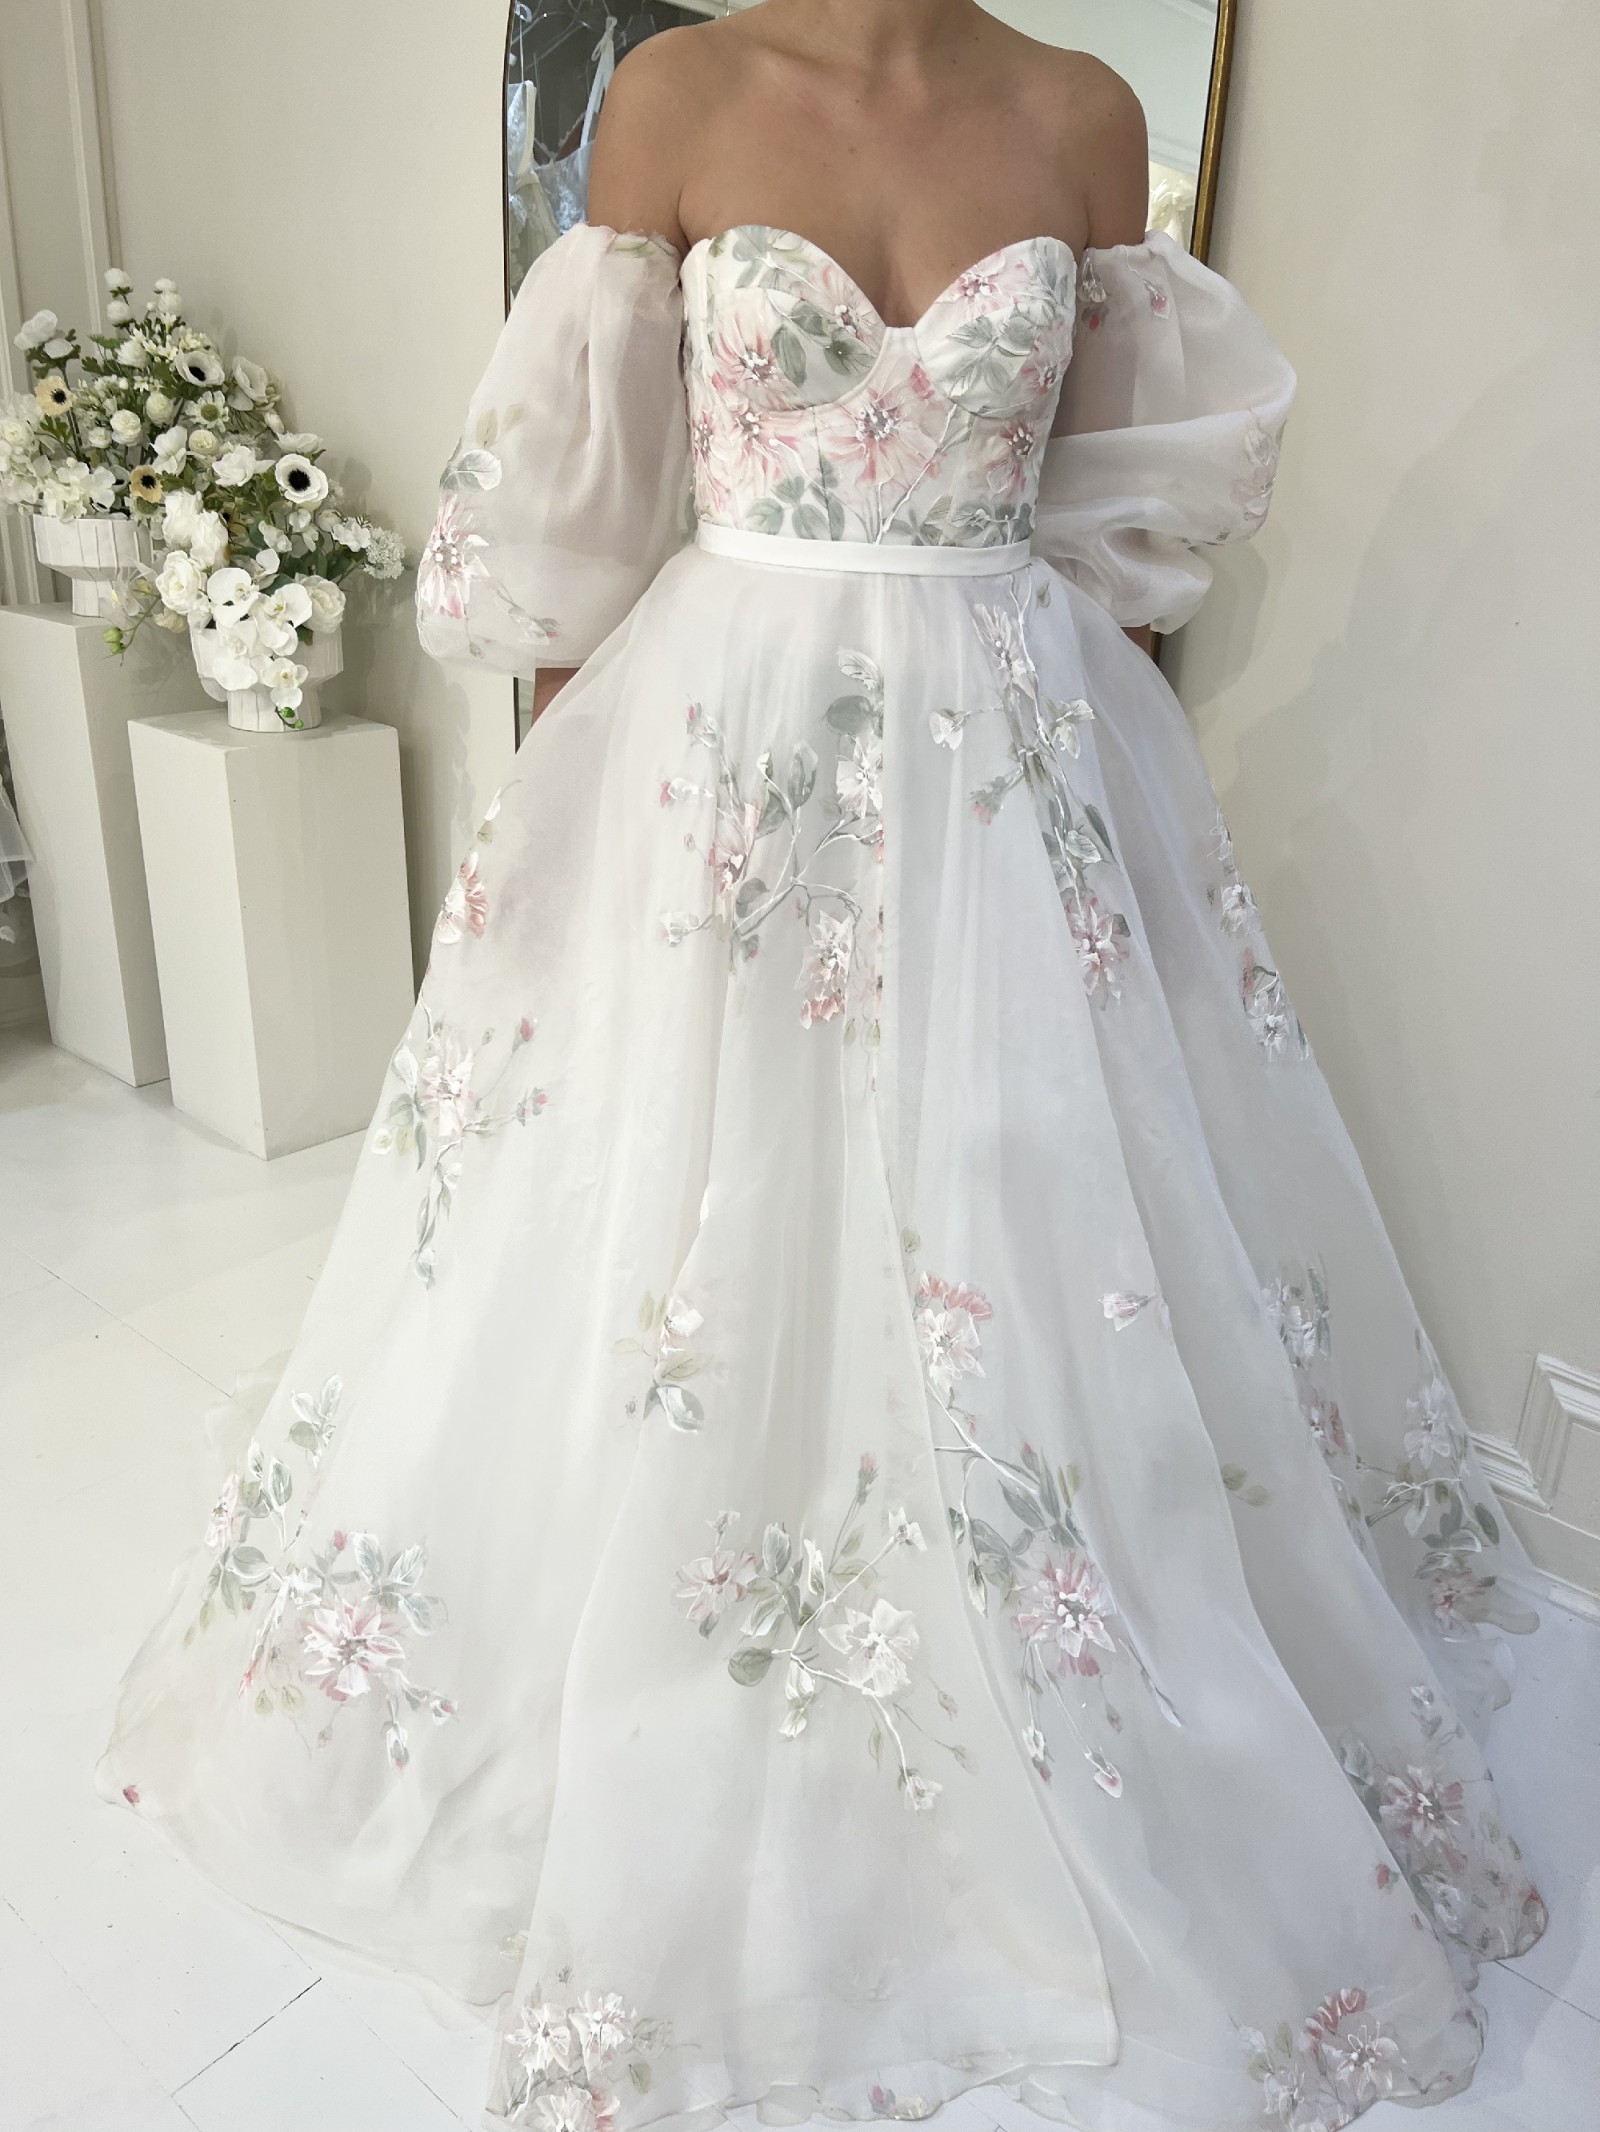 Savin London Angelina Sample Wedding Dress Save 73% - Stillwhite